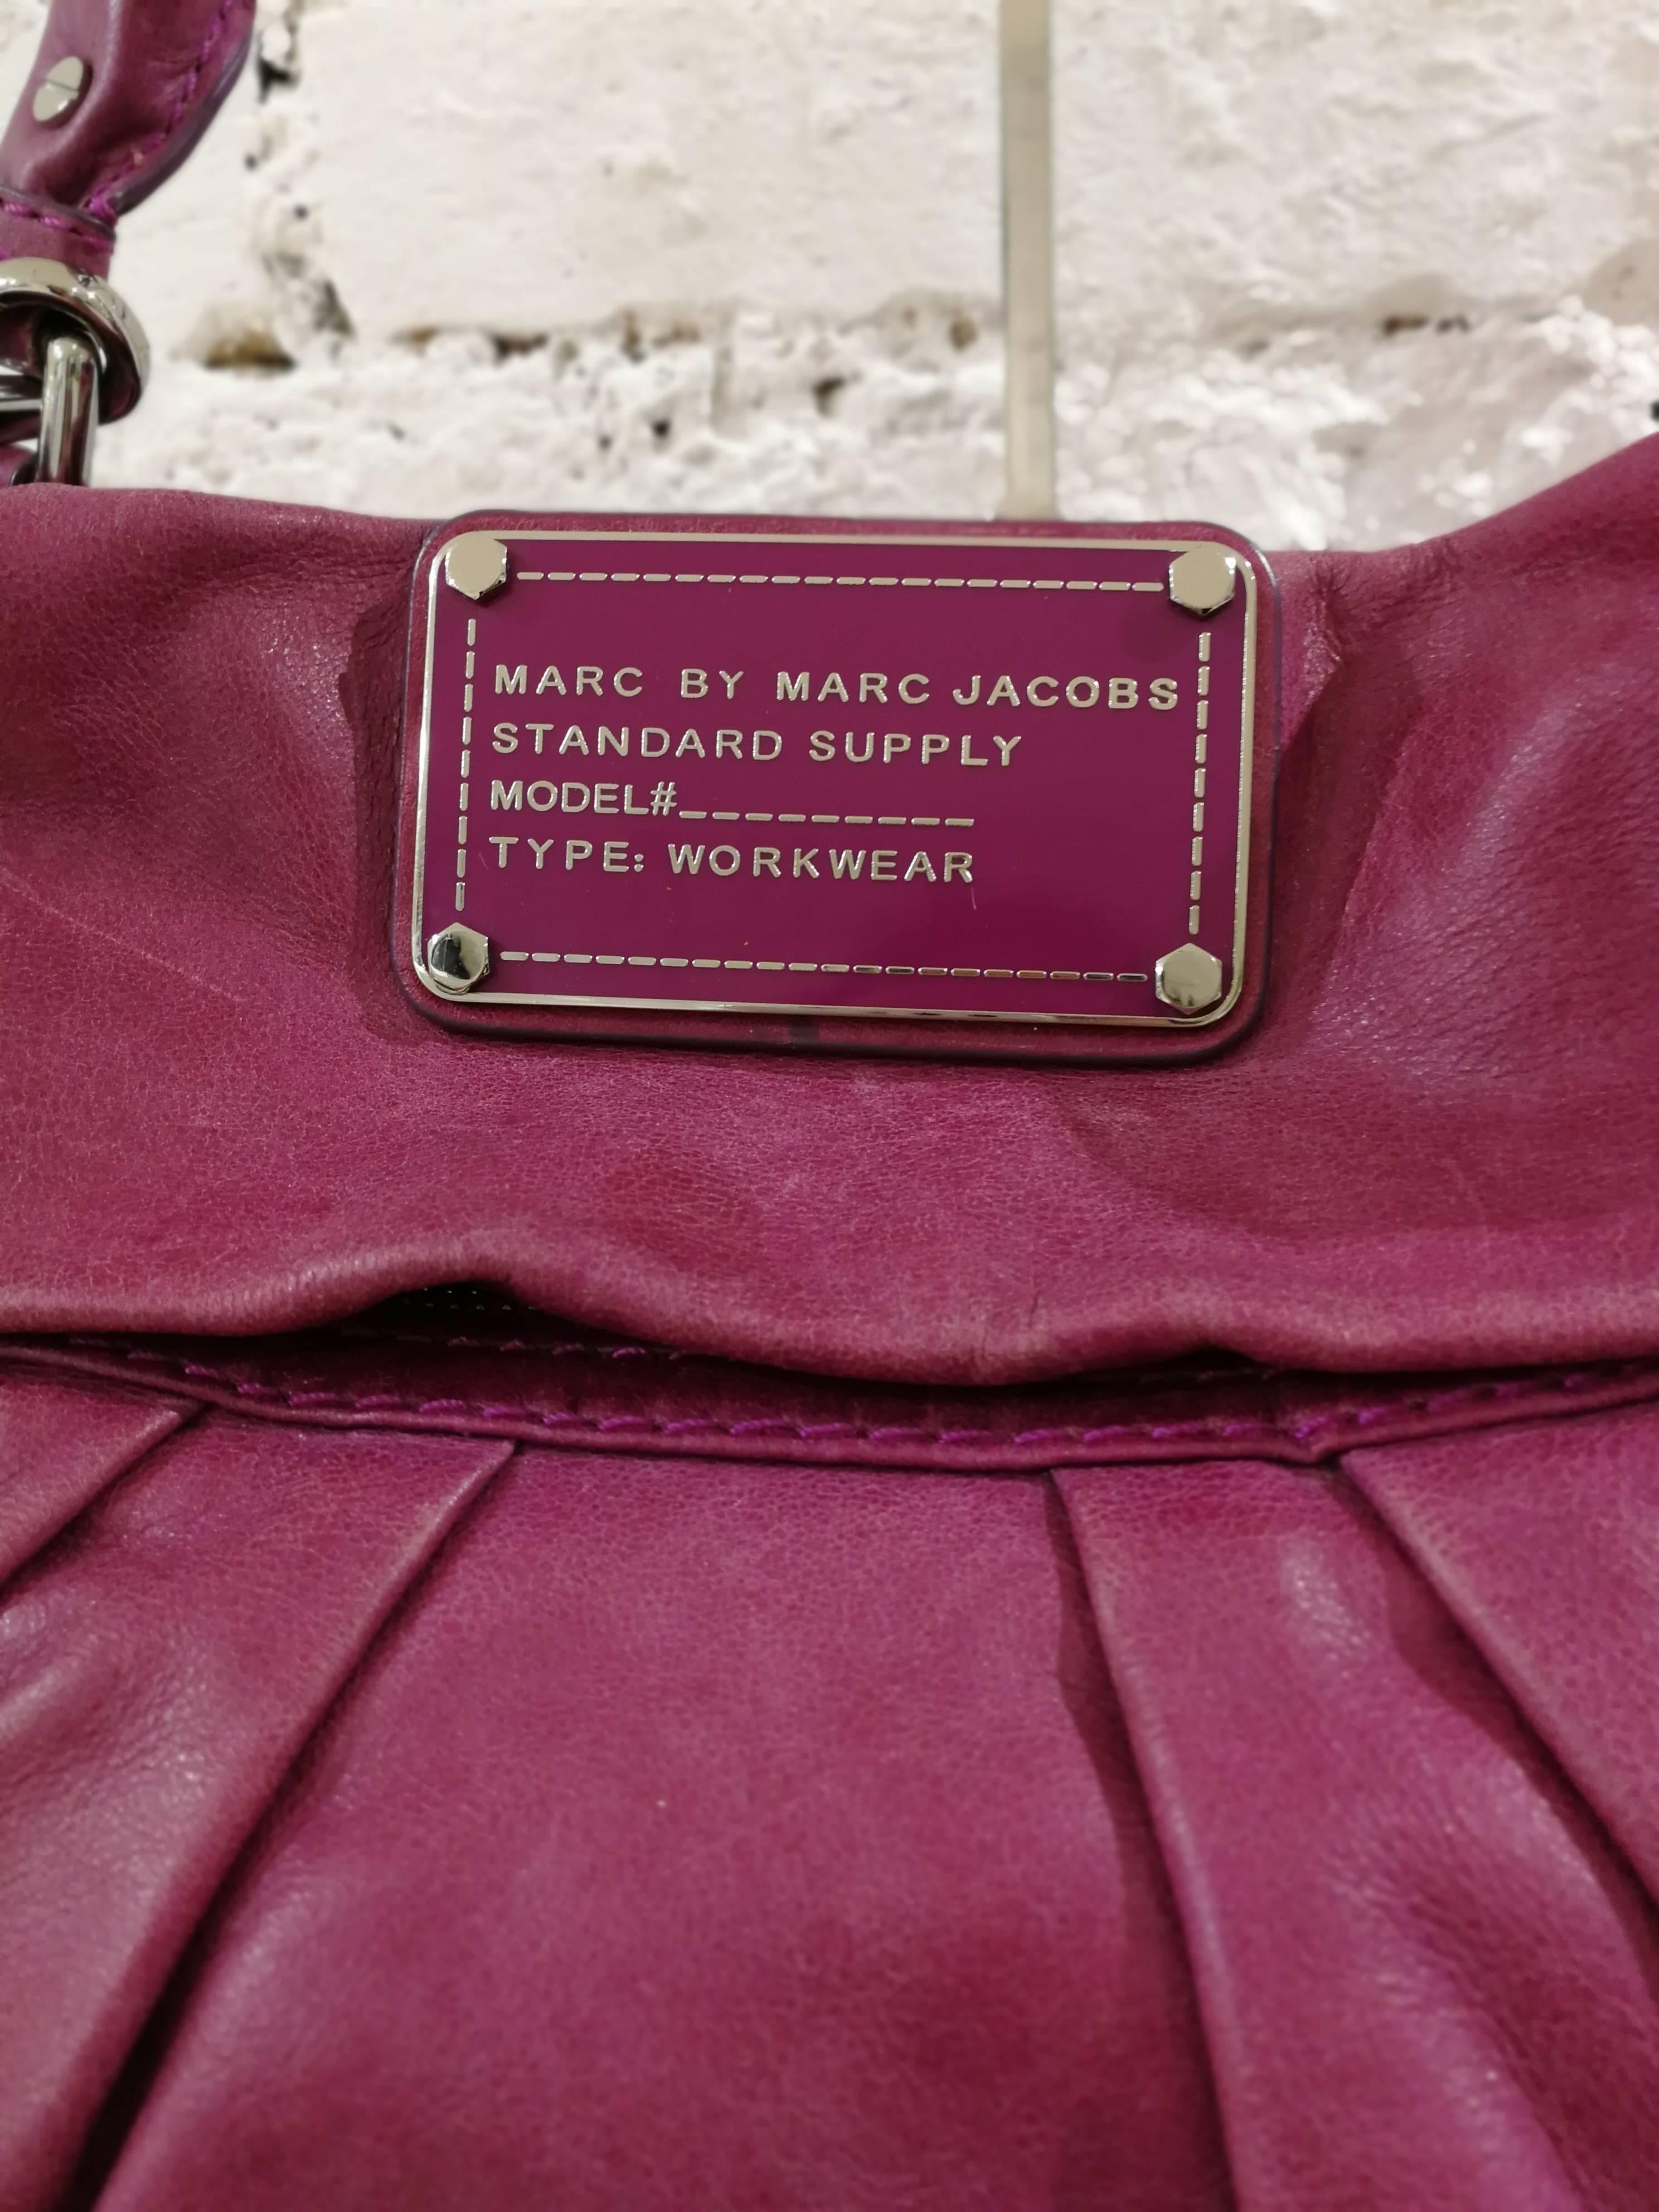 Marc Jacobs Purple leather Shoulder Bag

Shoulder strap available

Made in Indonesia